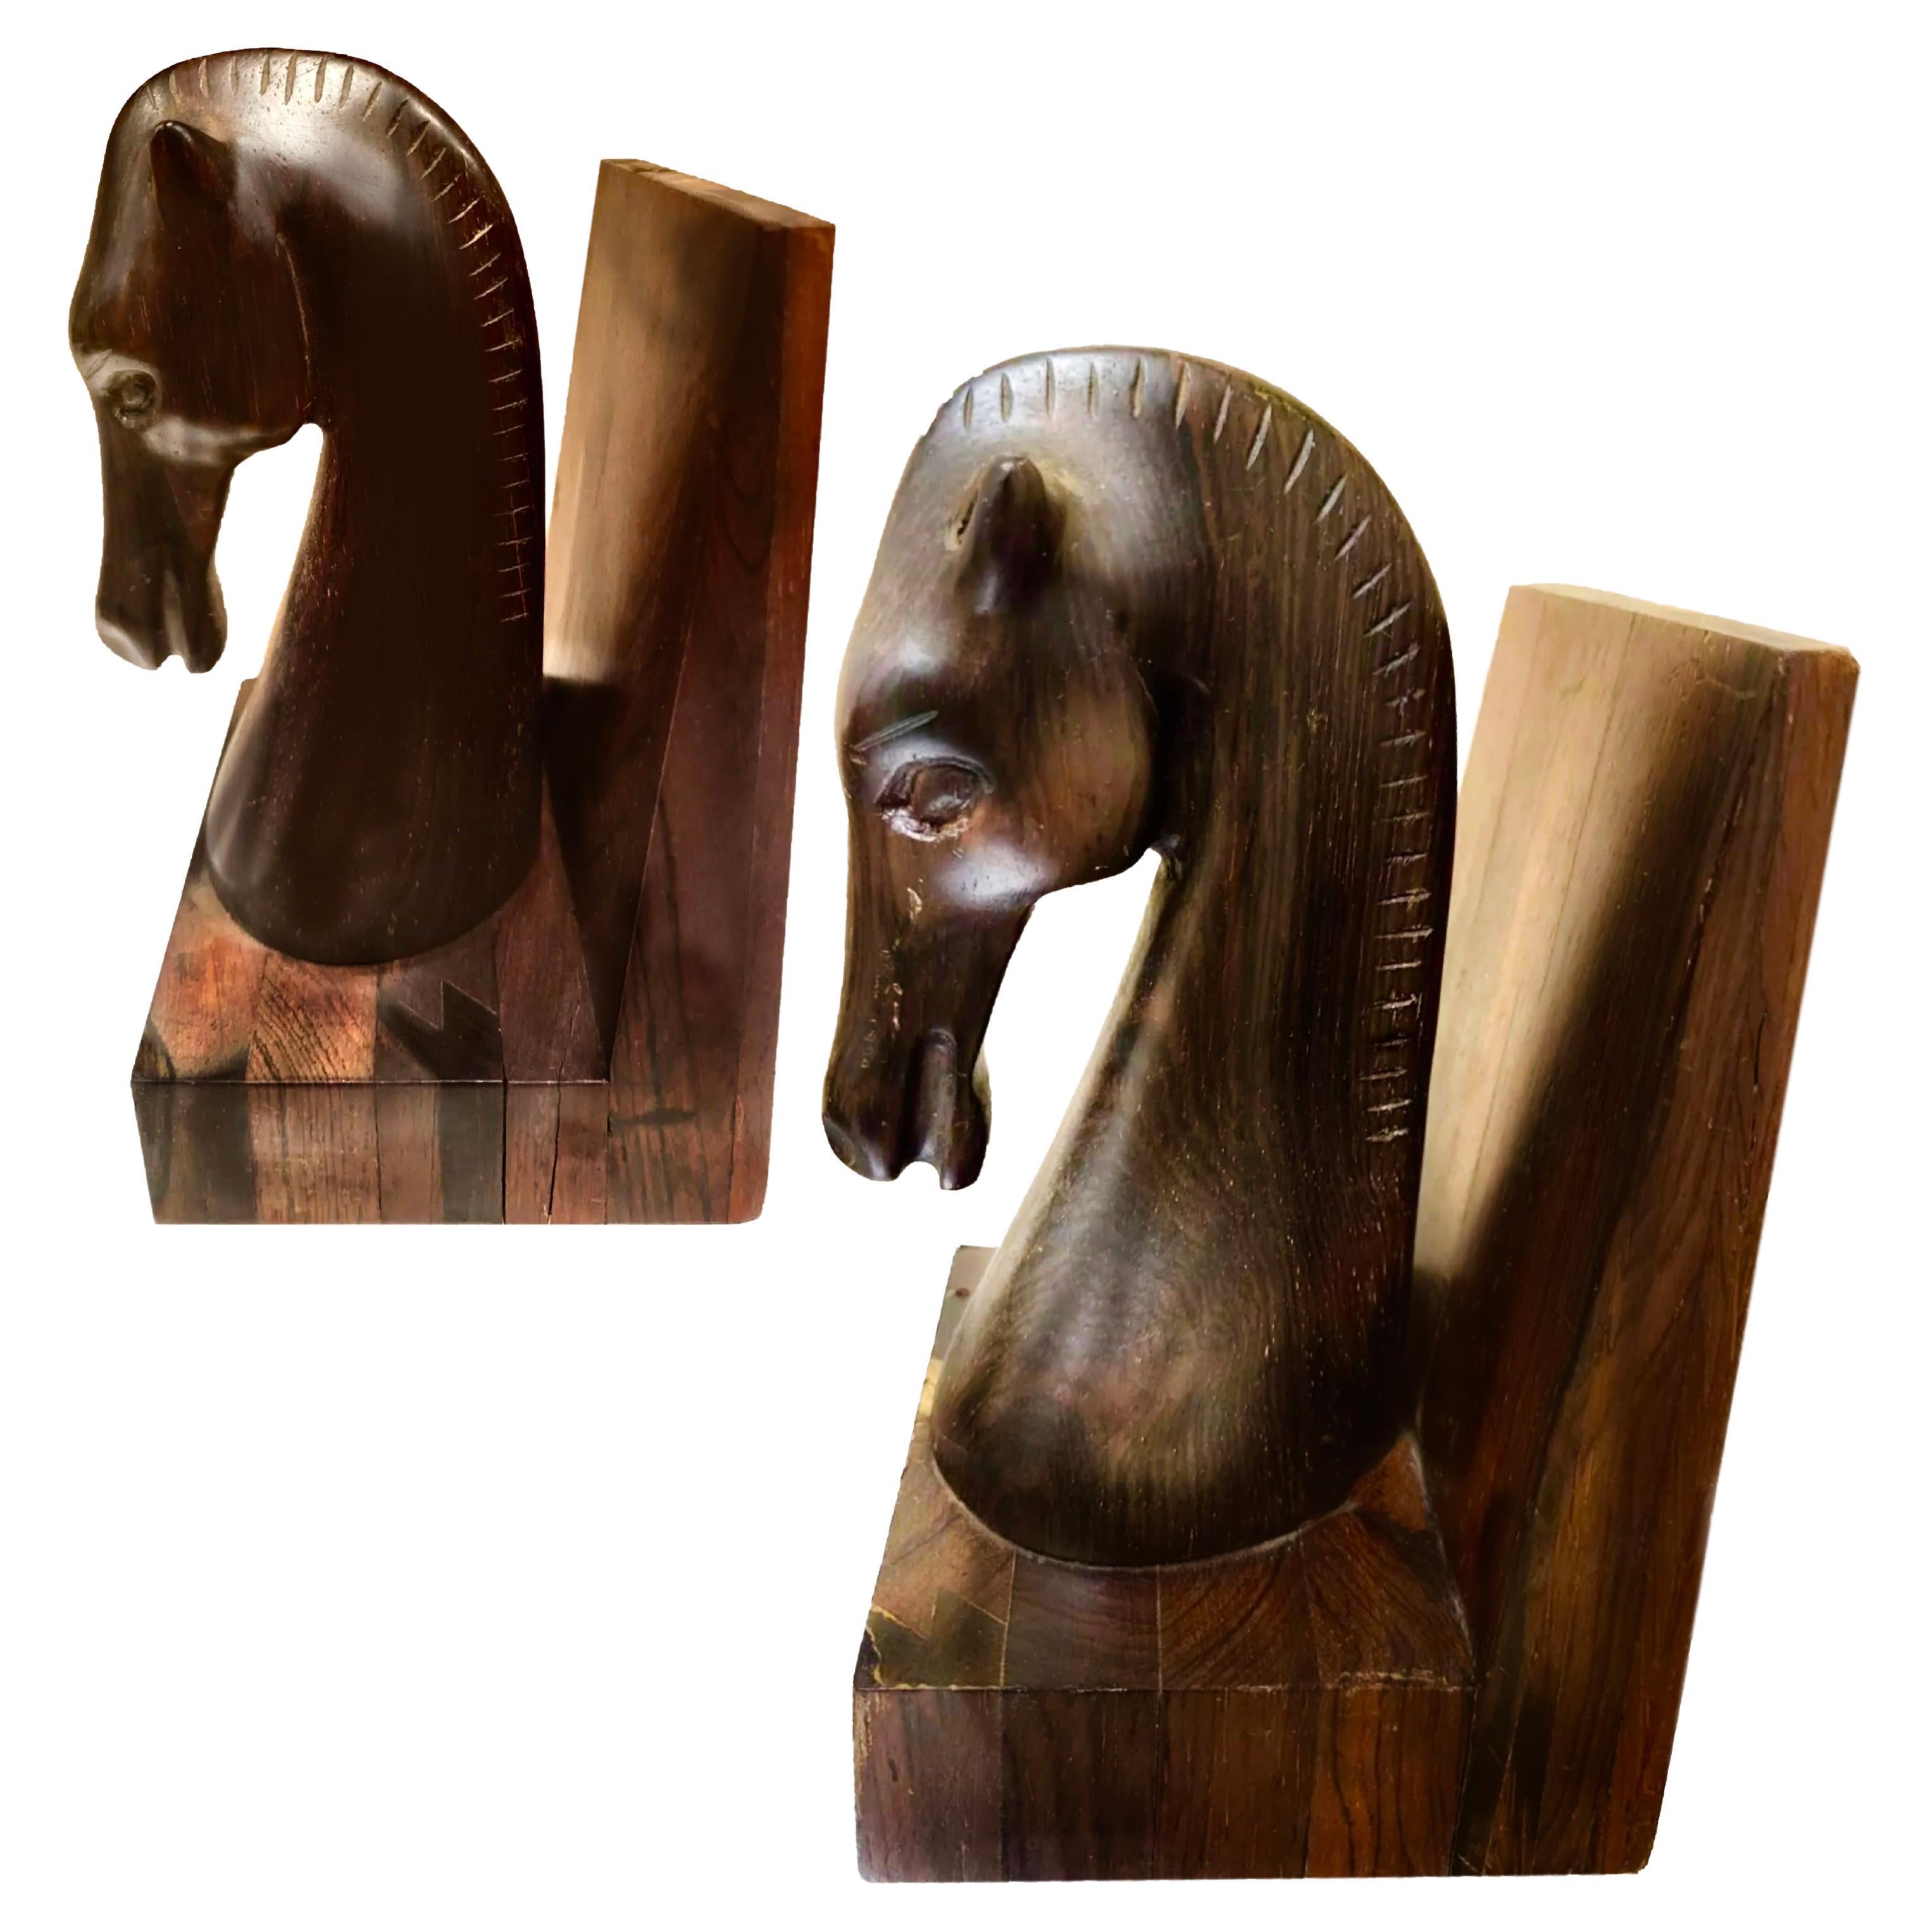 Jean Gillon Jacaranda Equine Sculptural Bookend Pair, Labelled, Brazil, 1960s For Sale